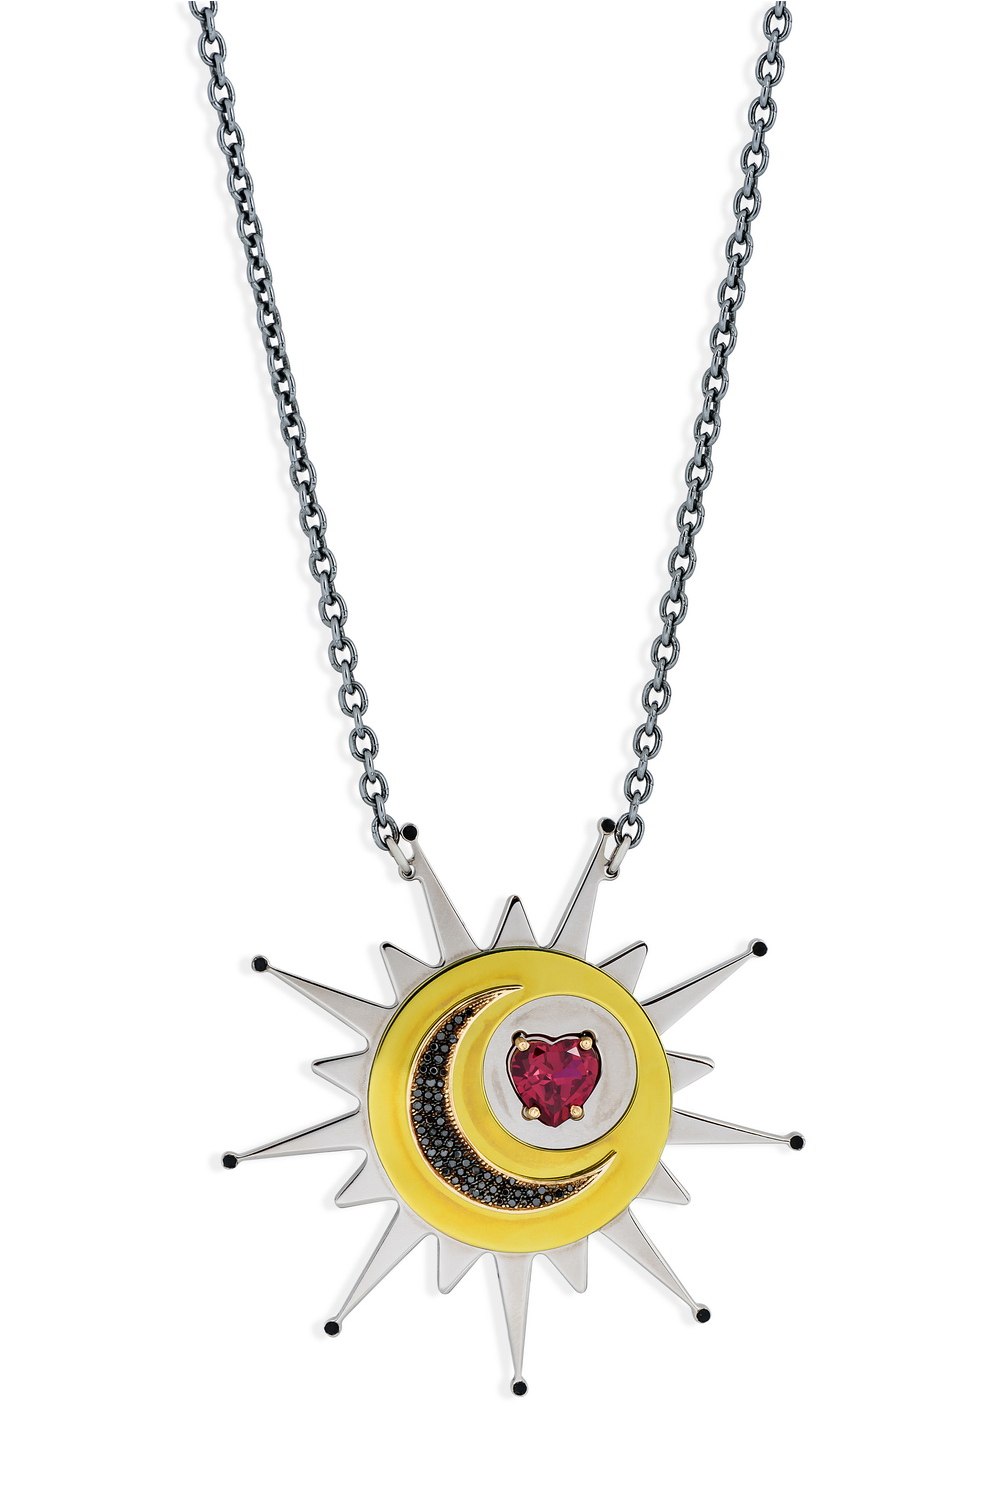 Red Heart Sun Pendant Necklace With Black Diamond Moon